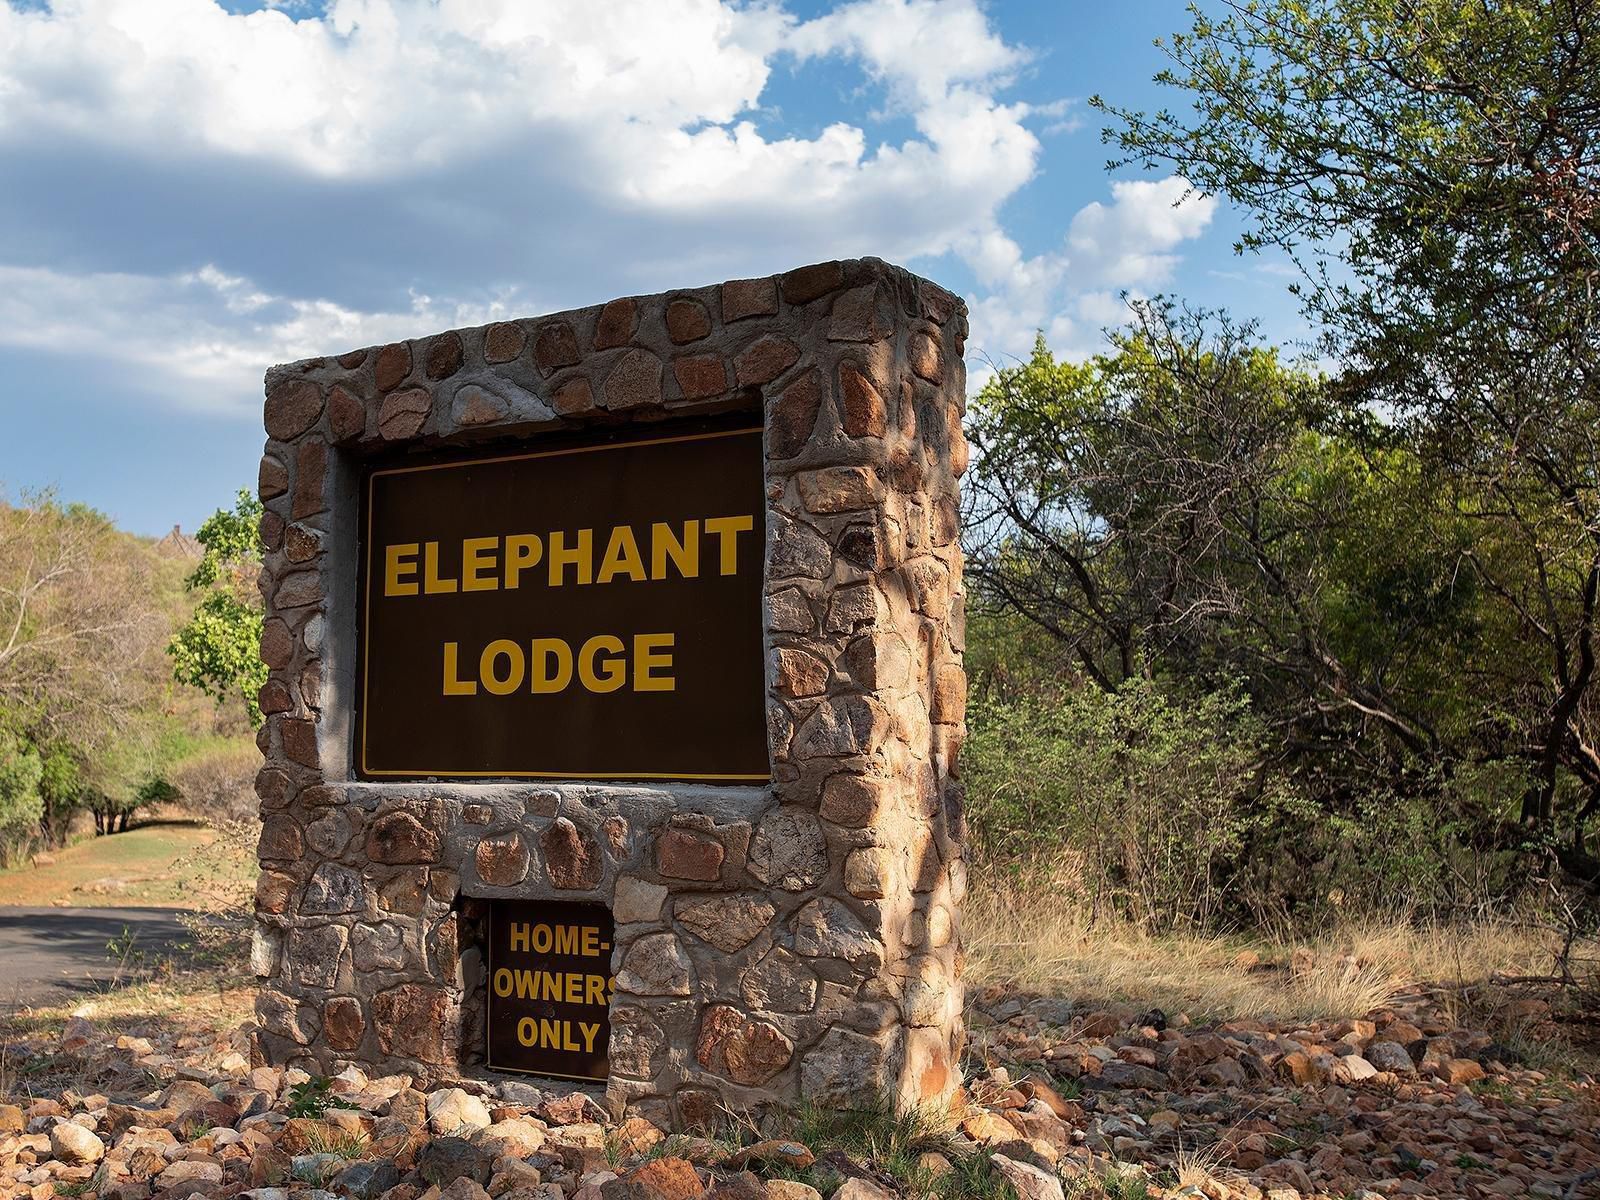 Mabalingwe Elephant Lodge Units 267 7 And 267 8 Mabalingwe Nature Reserve Bela Bela Warmbaths Limpopo Province South Africa Elephant, Mammal, Animal, Herbivore, Sign